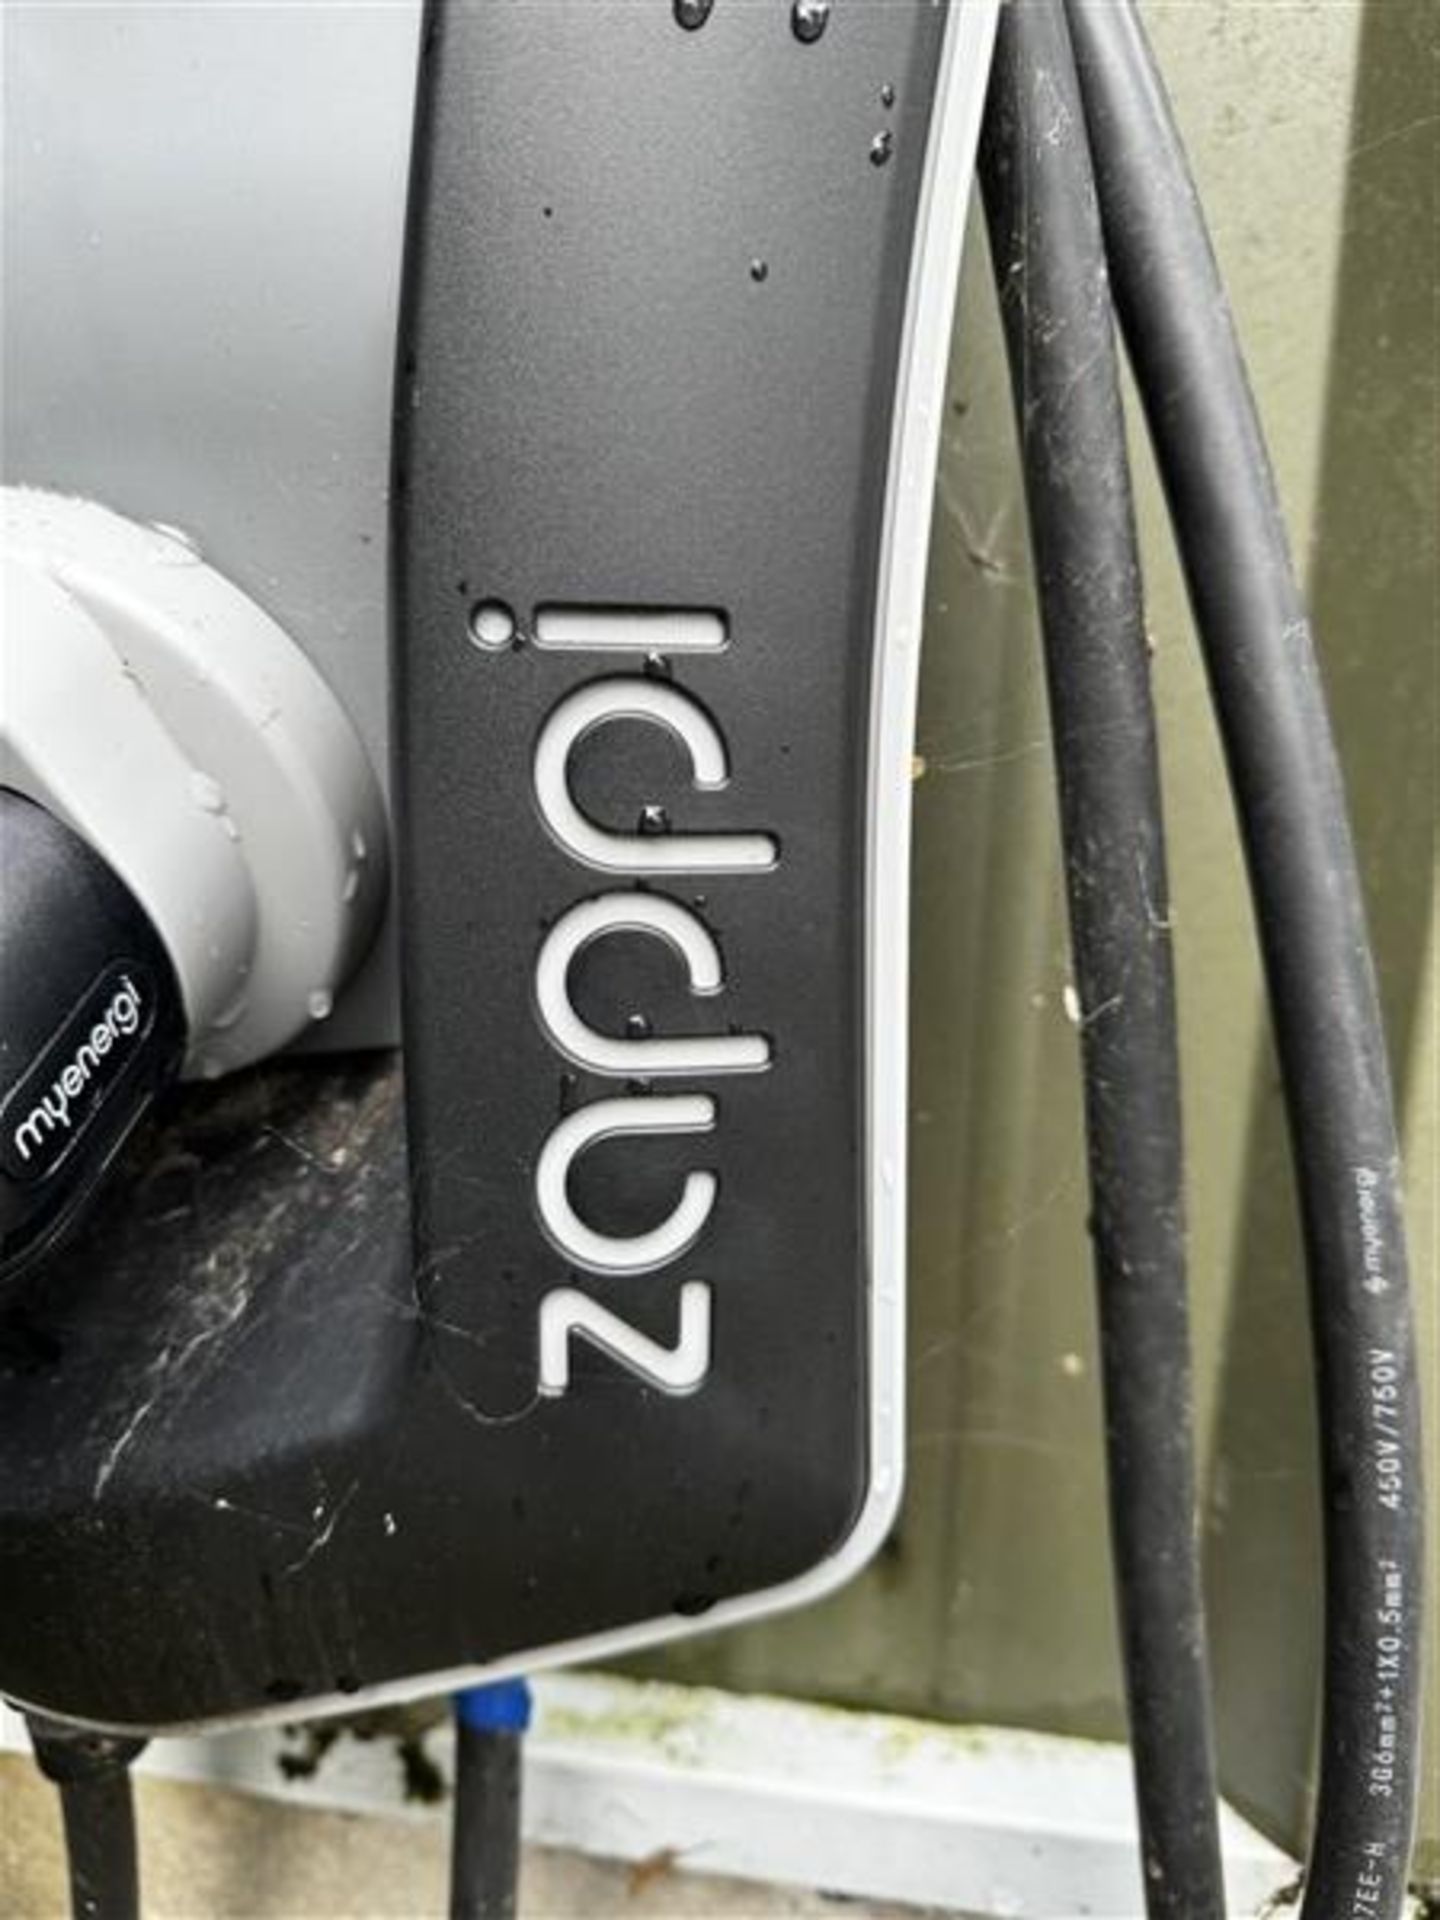 Myenergi Zappi electric car wall mounted charging point - Image 2 of 5